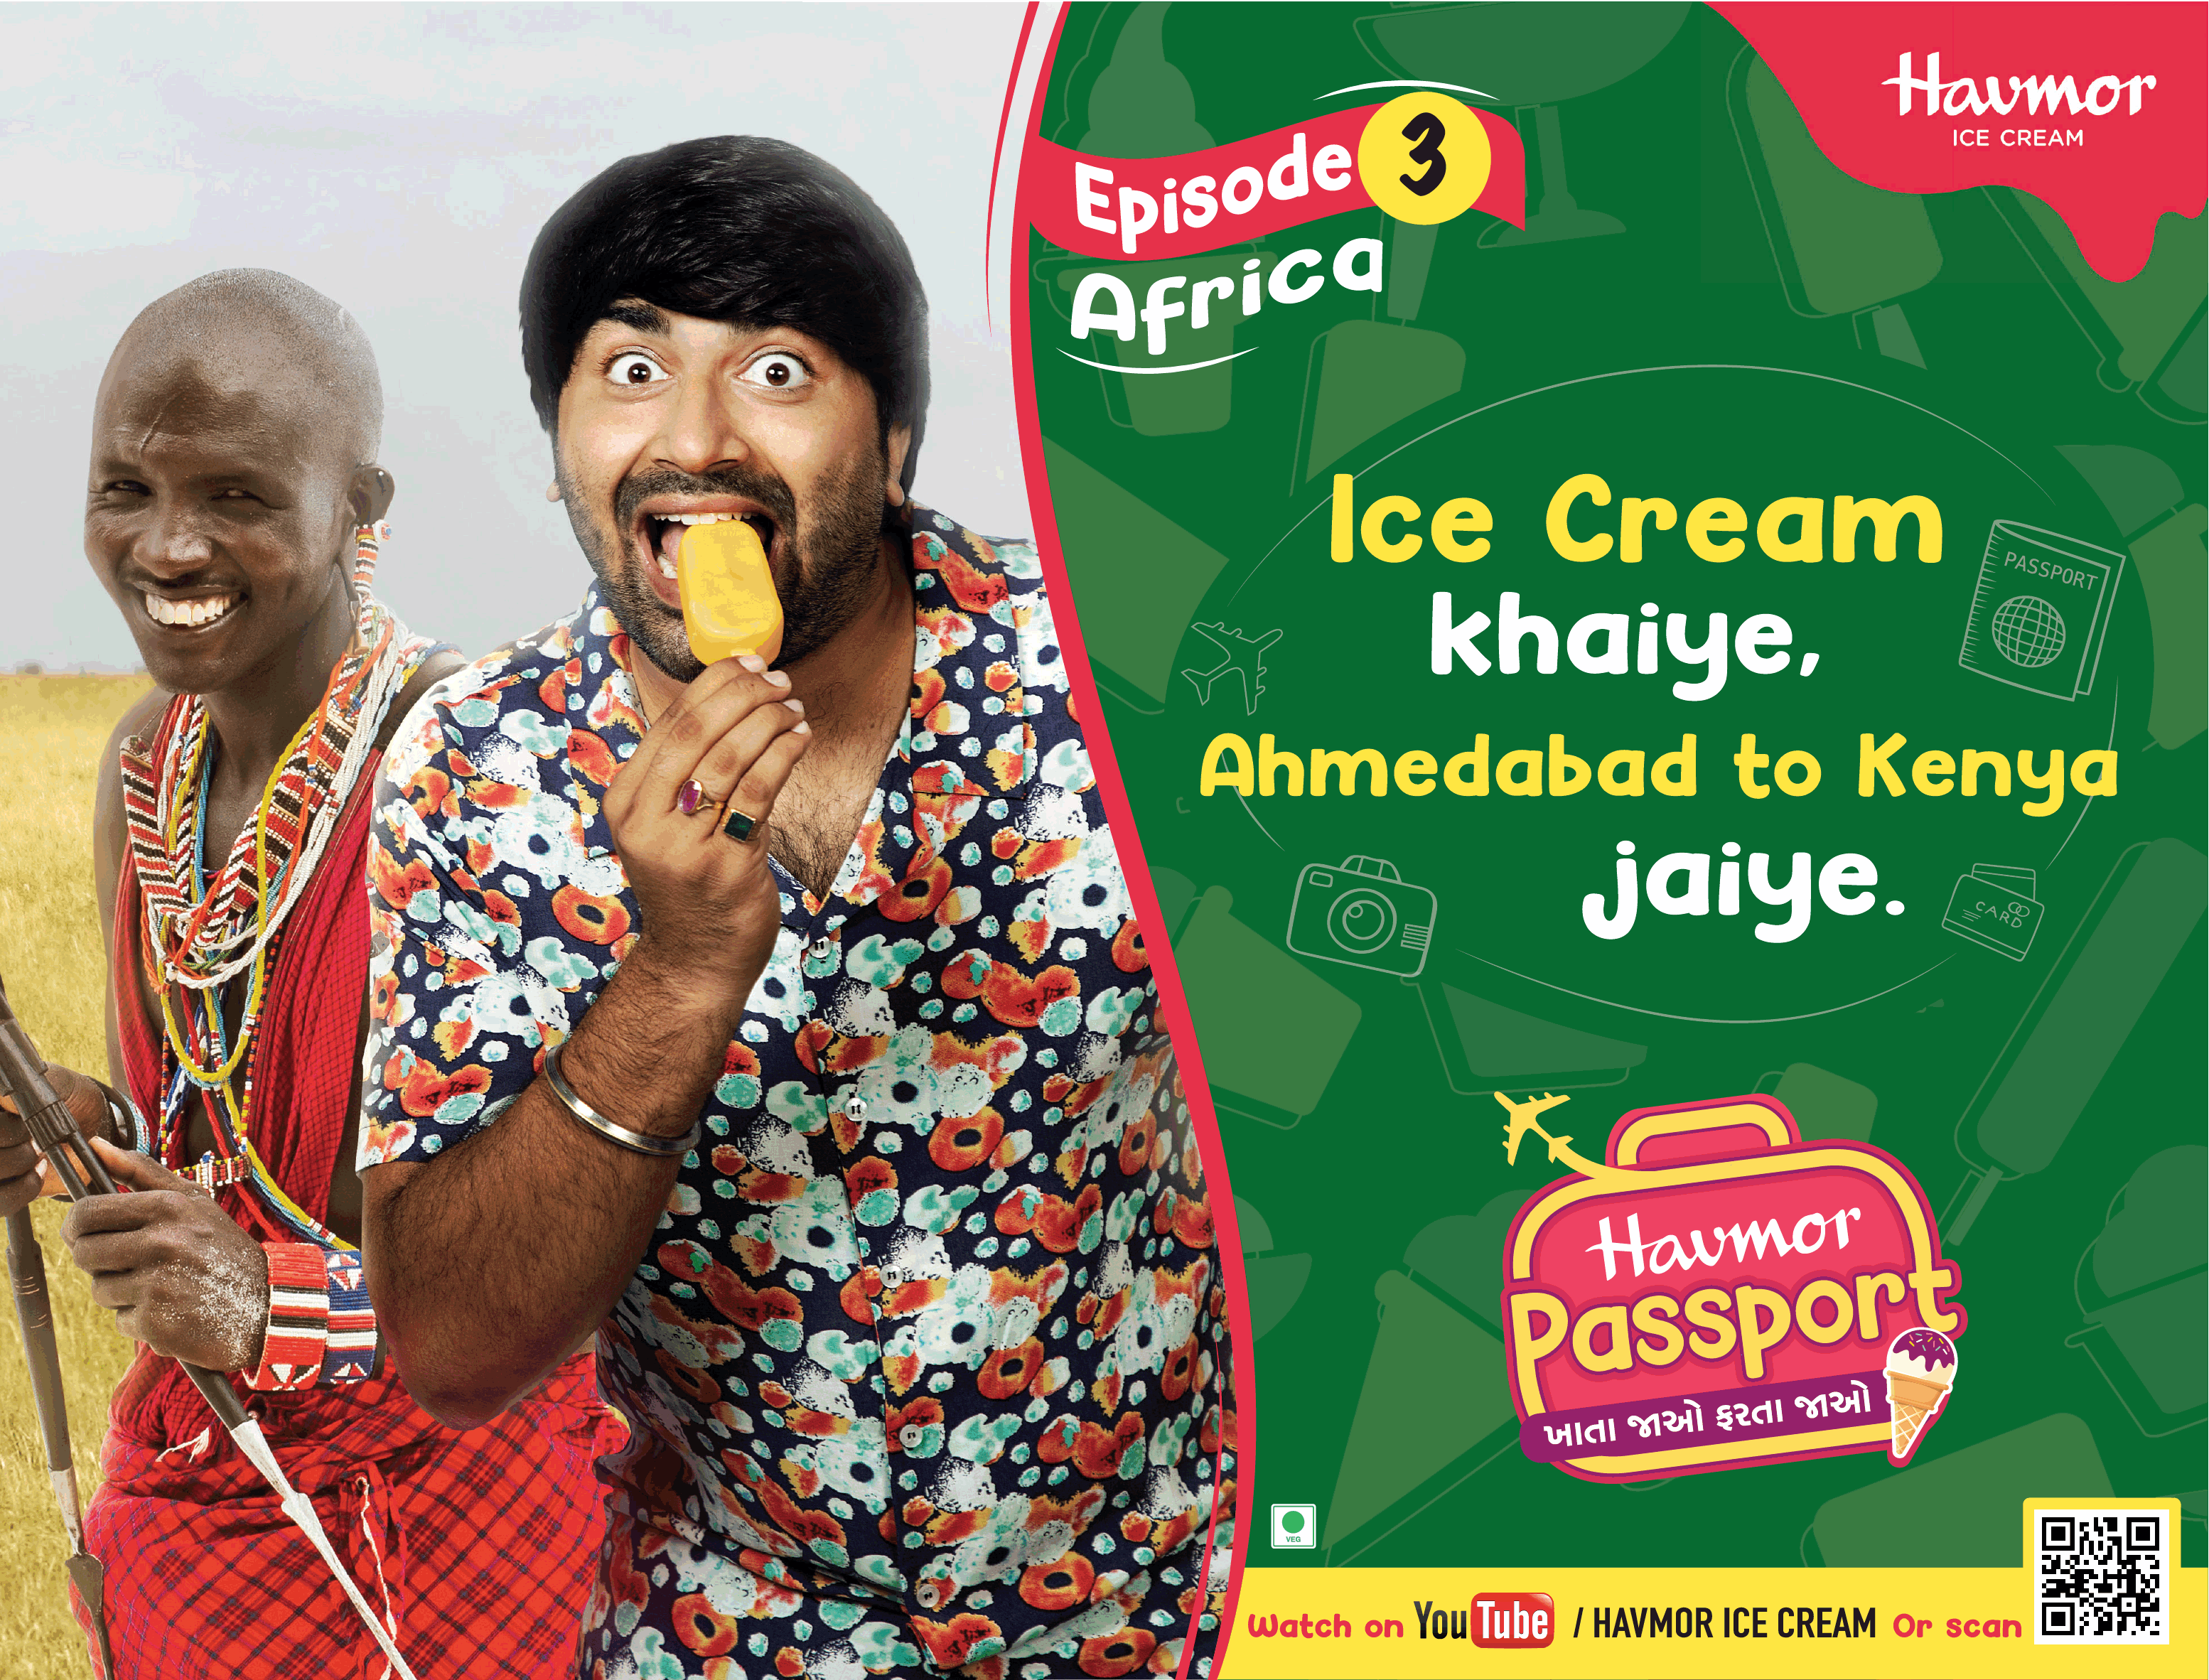 havmor-passport-ice-cream-kahiye-ahmedabad-to-kenya-jaiye-ad-toi-ahmedabad-9-10-2020